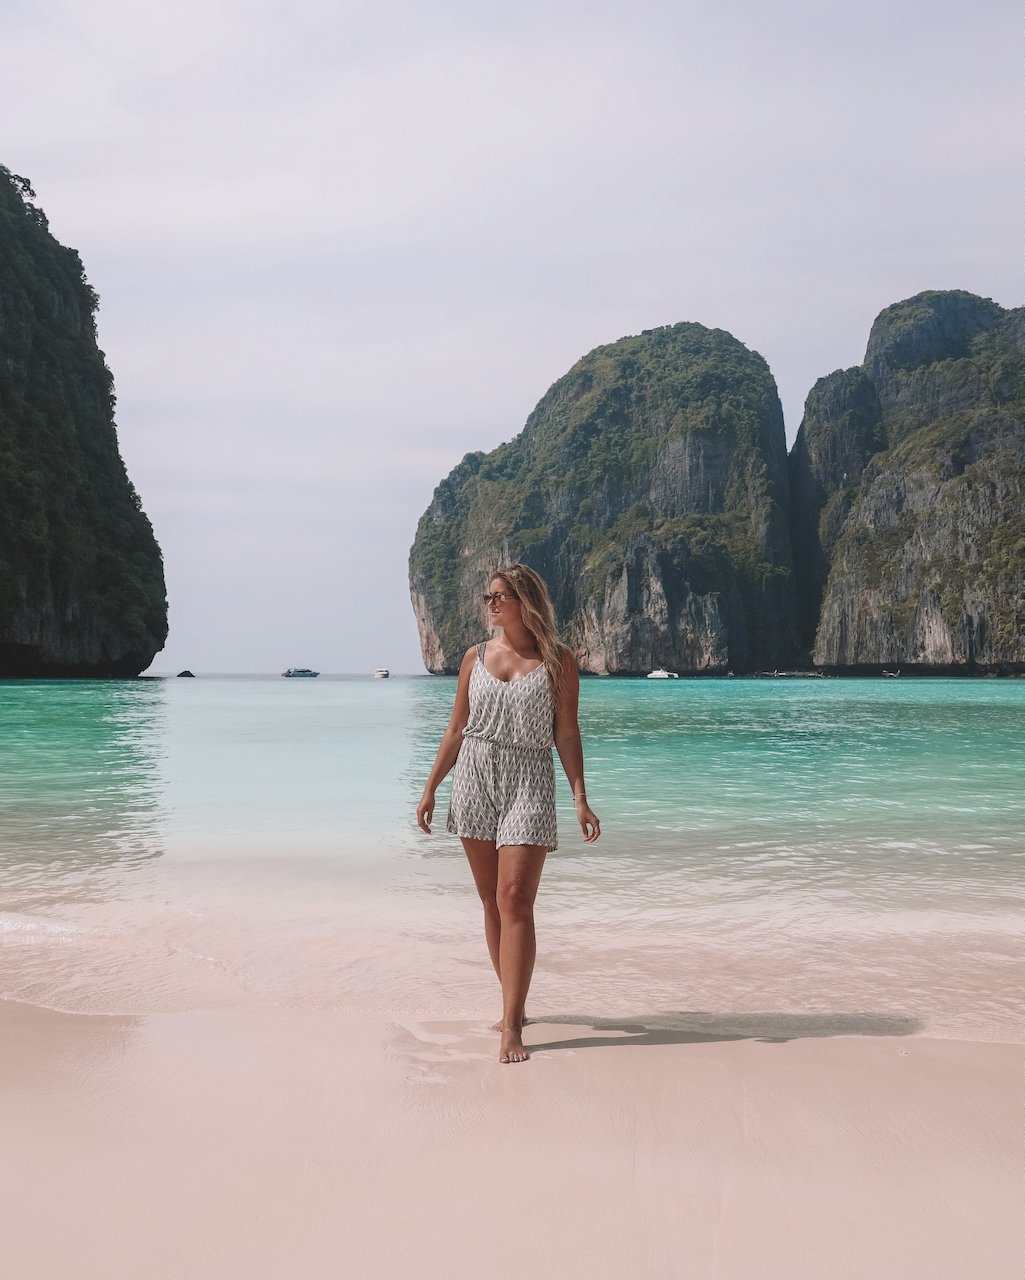 Prendre la pause devant la merveilleuse plage - Excursion à Maya Bay - Krabi - Thaïlande